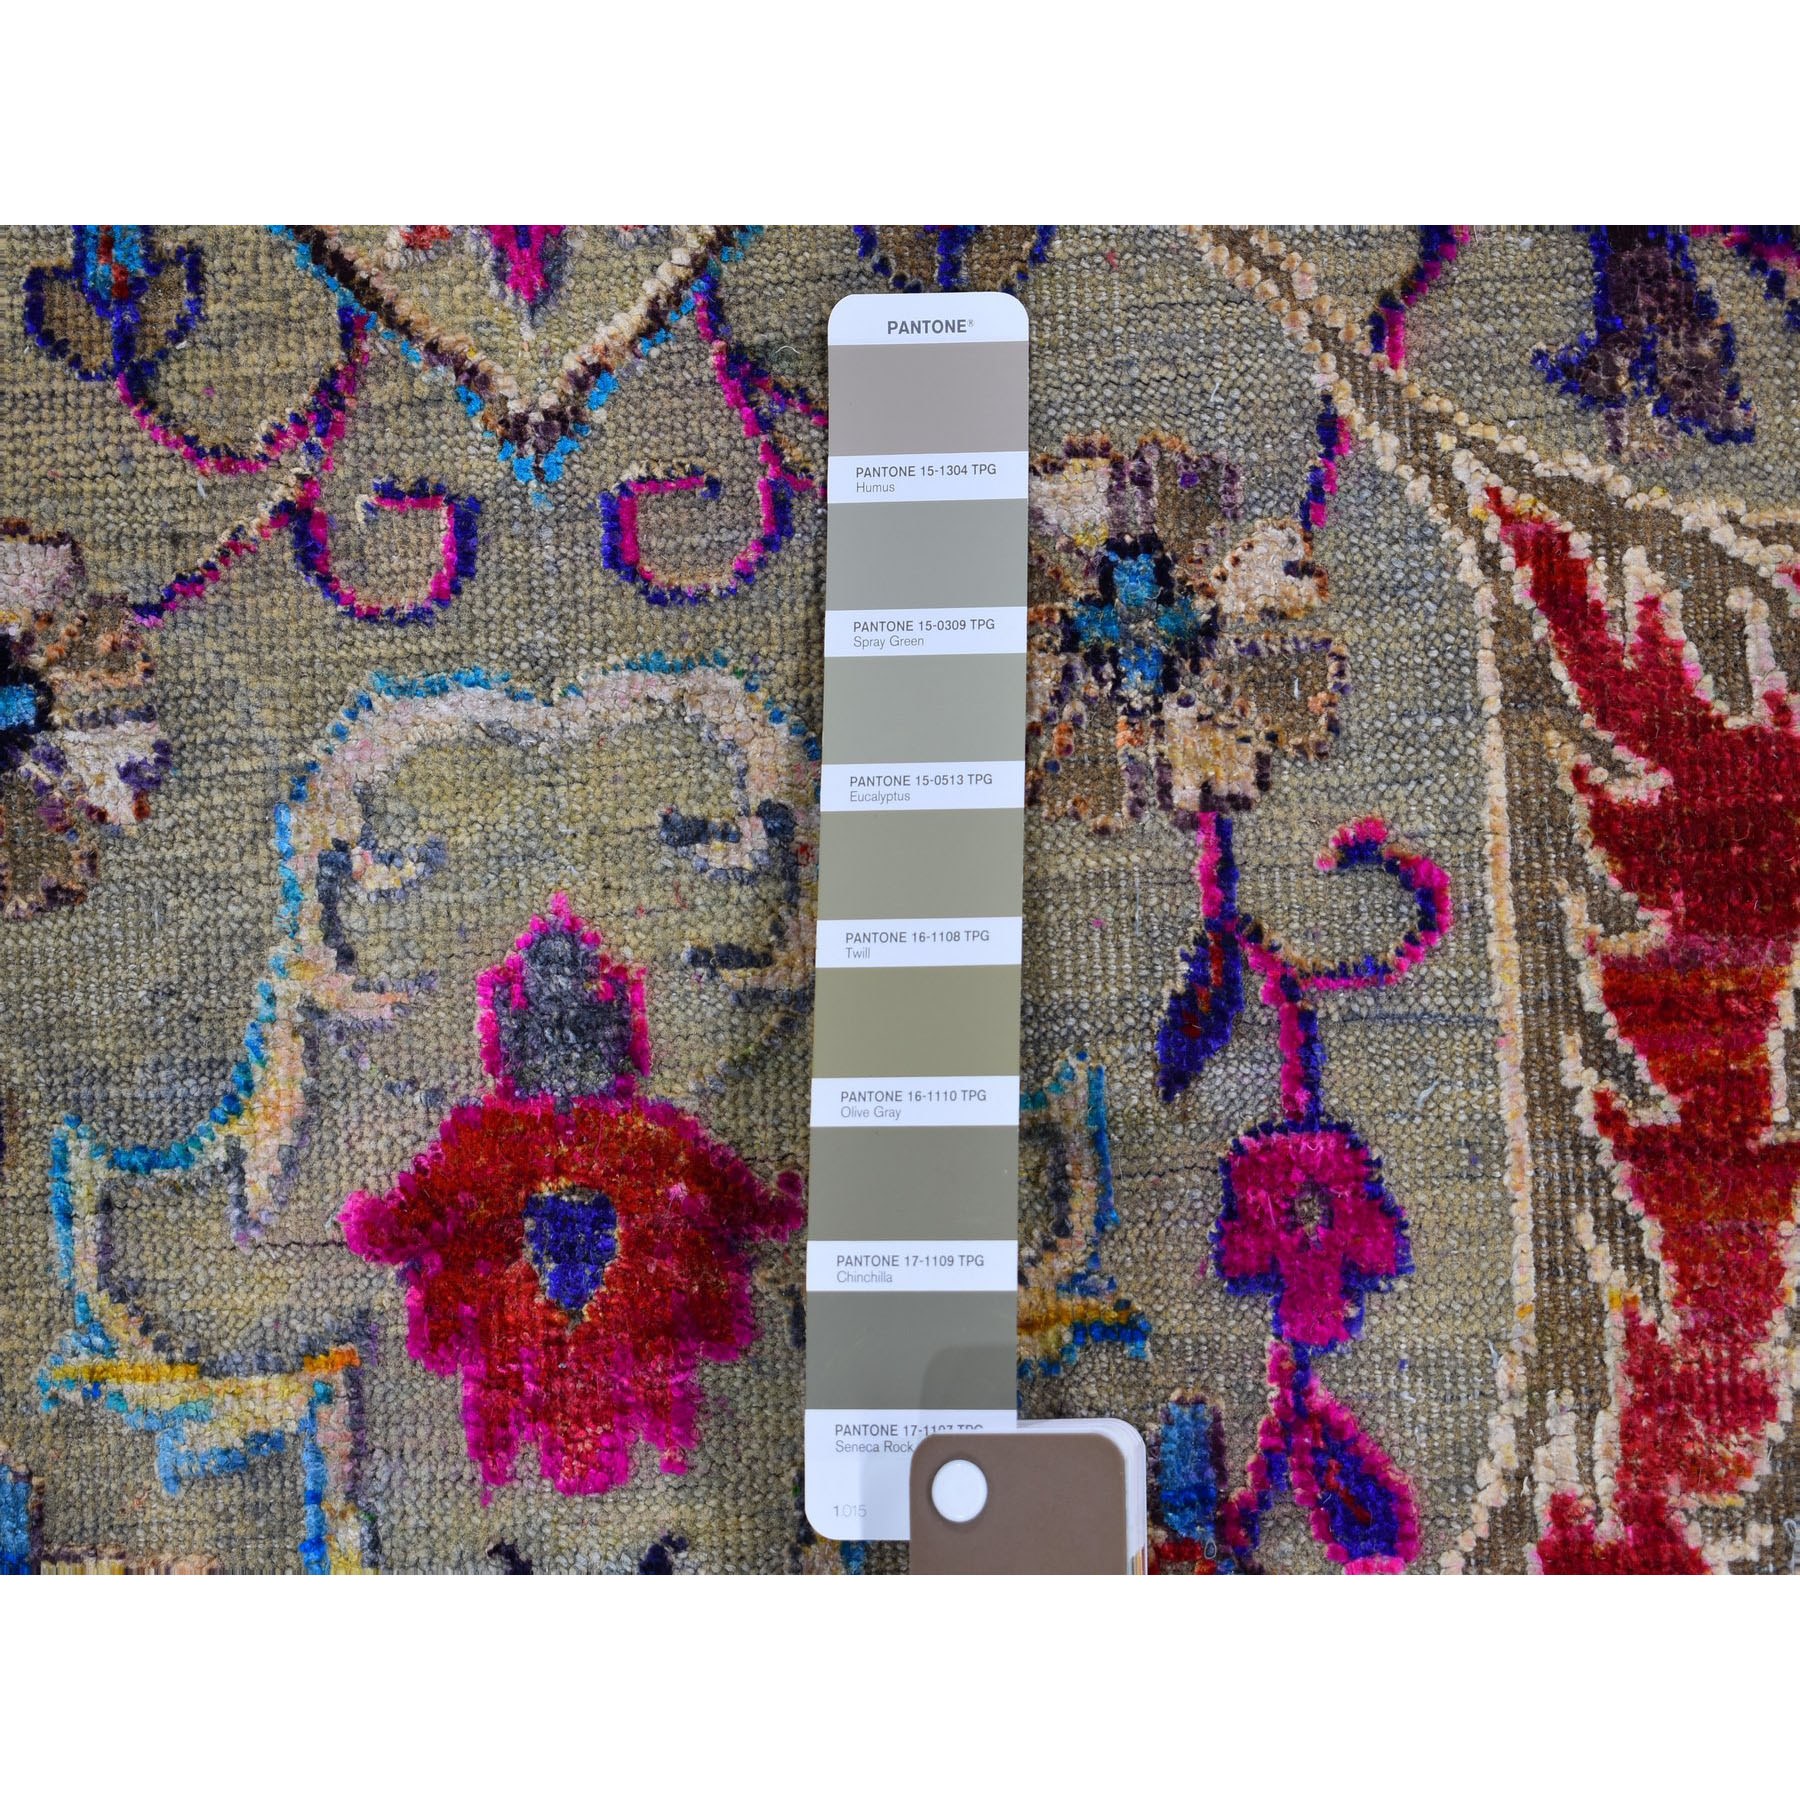 8'x10' Sapphire Blue Sari Silk and Textured Wool Colorful Maharaja Design Hand Woven Oriental Rug 